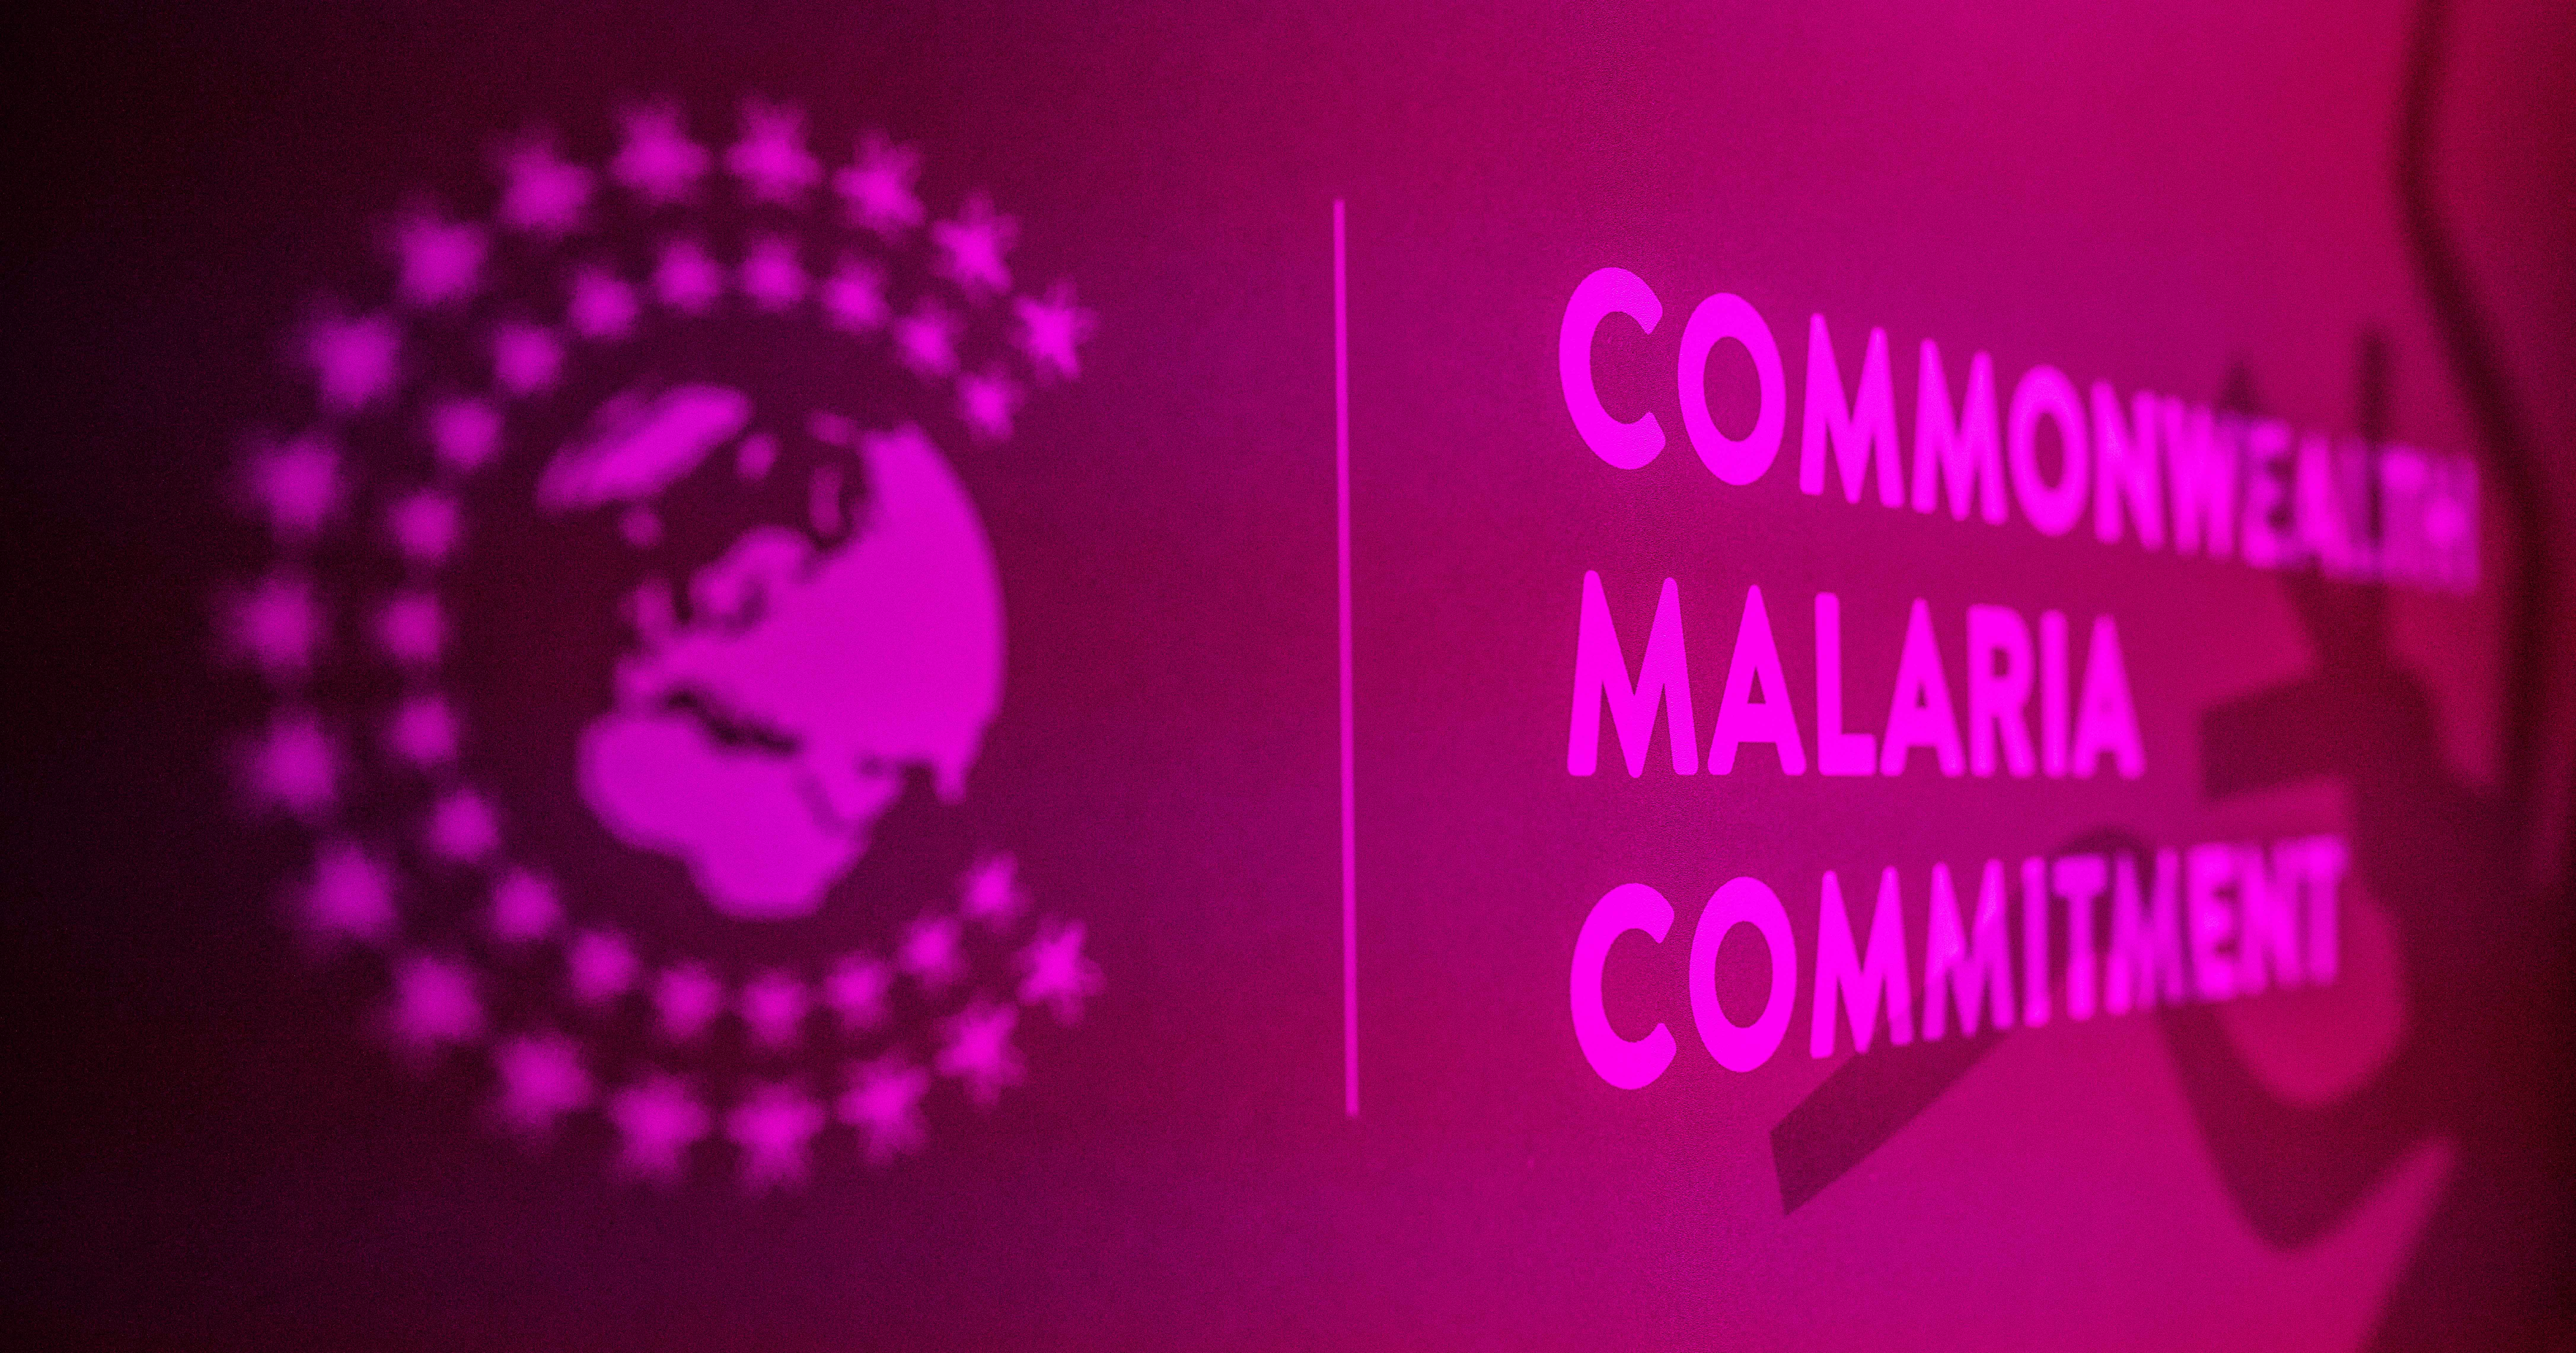 Commonwealth malaria commitment banner